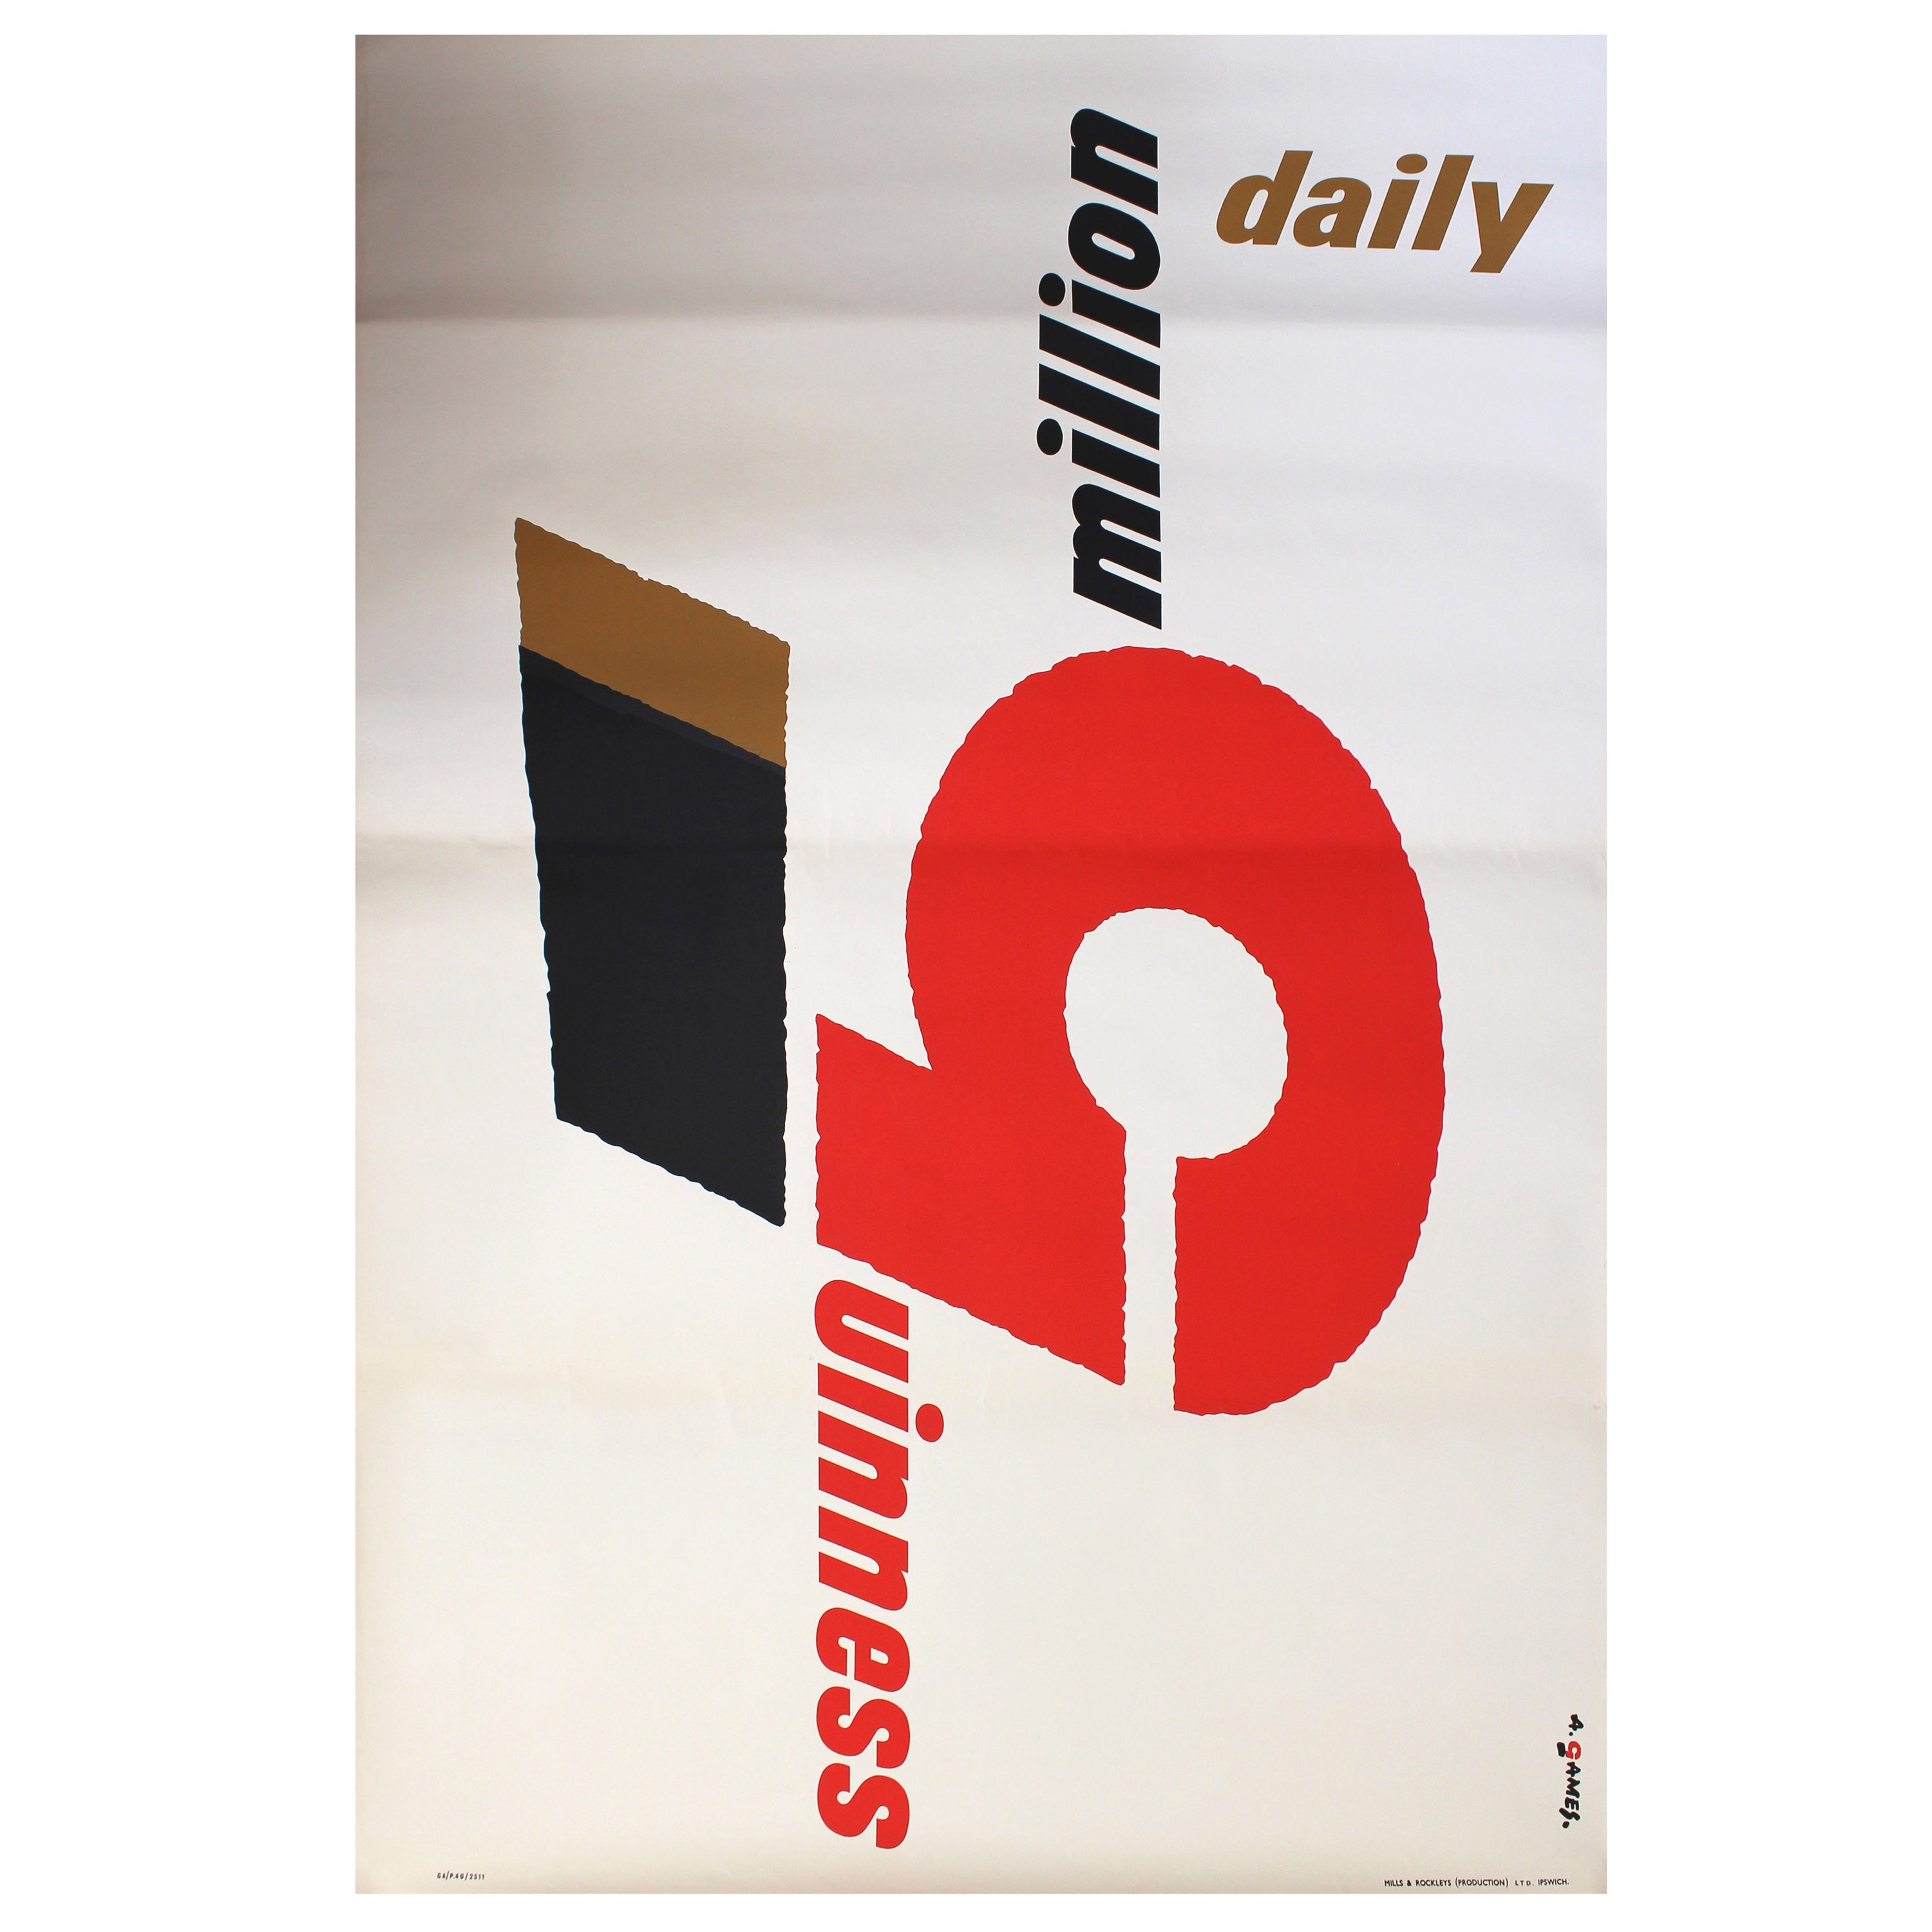 Original 1958 Modernist Design Advertising Poster for Guinness by Abram Games